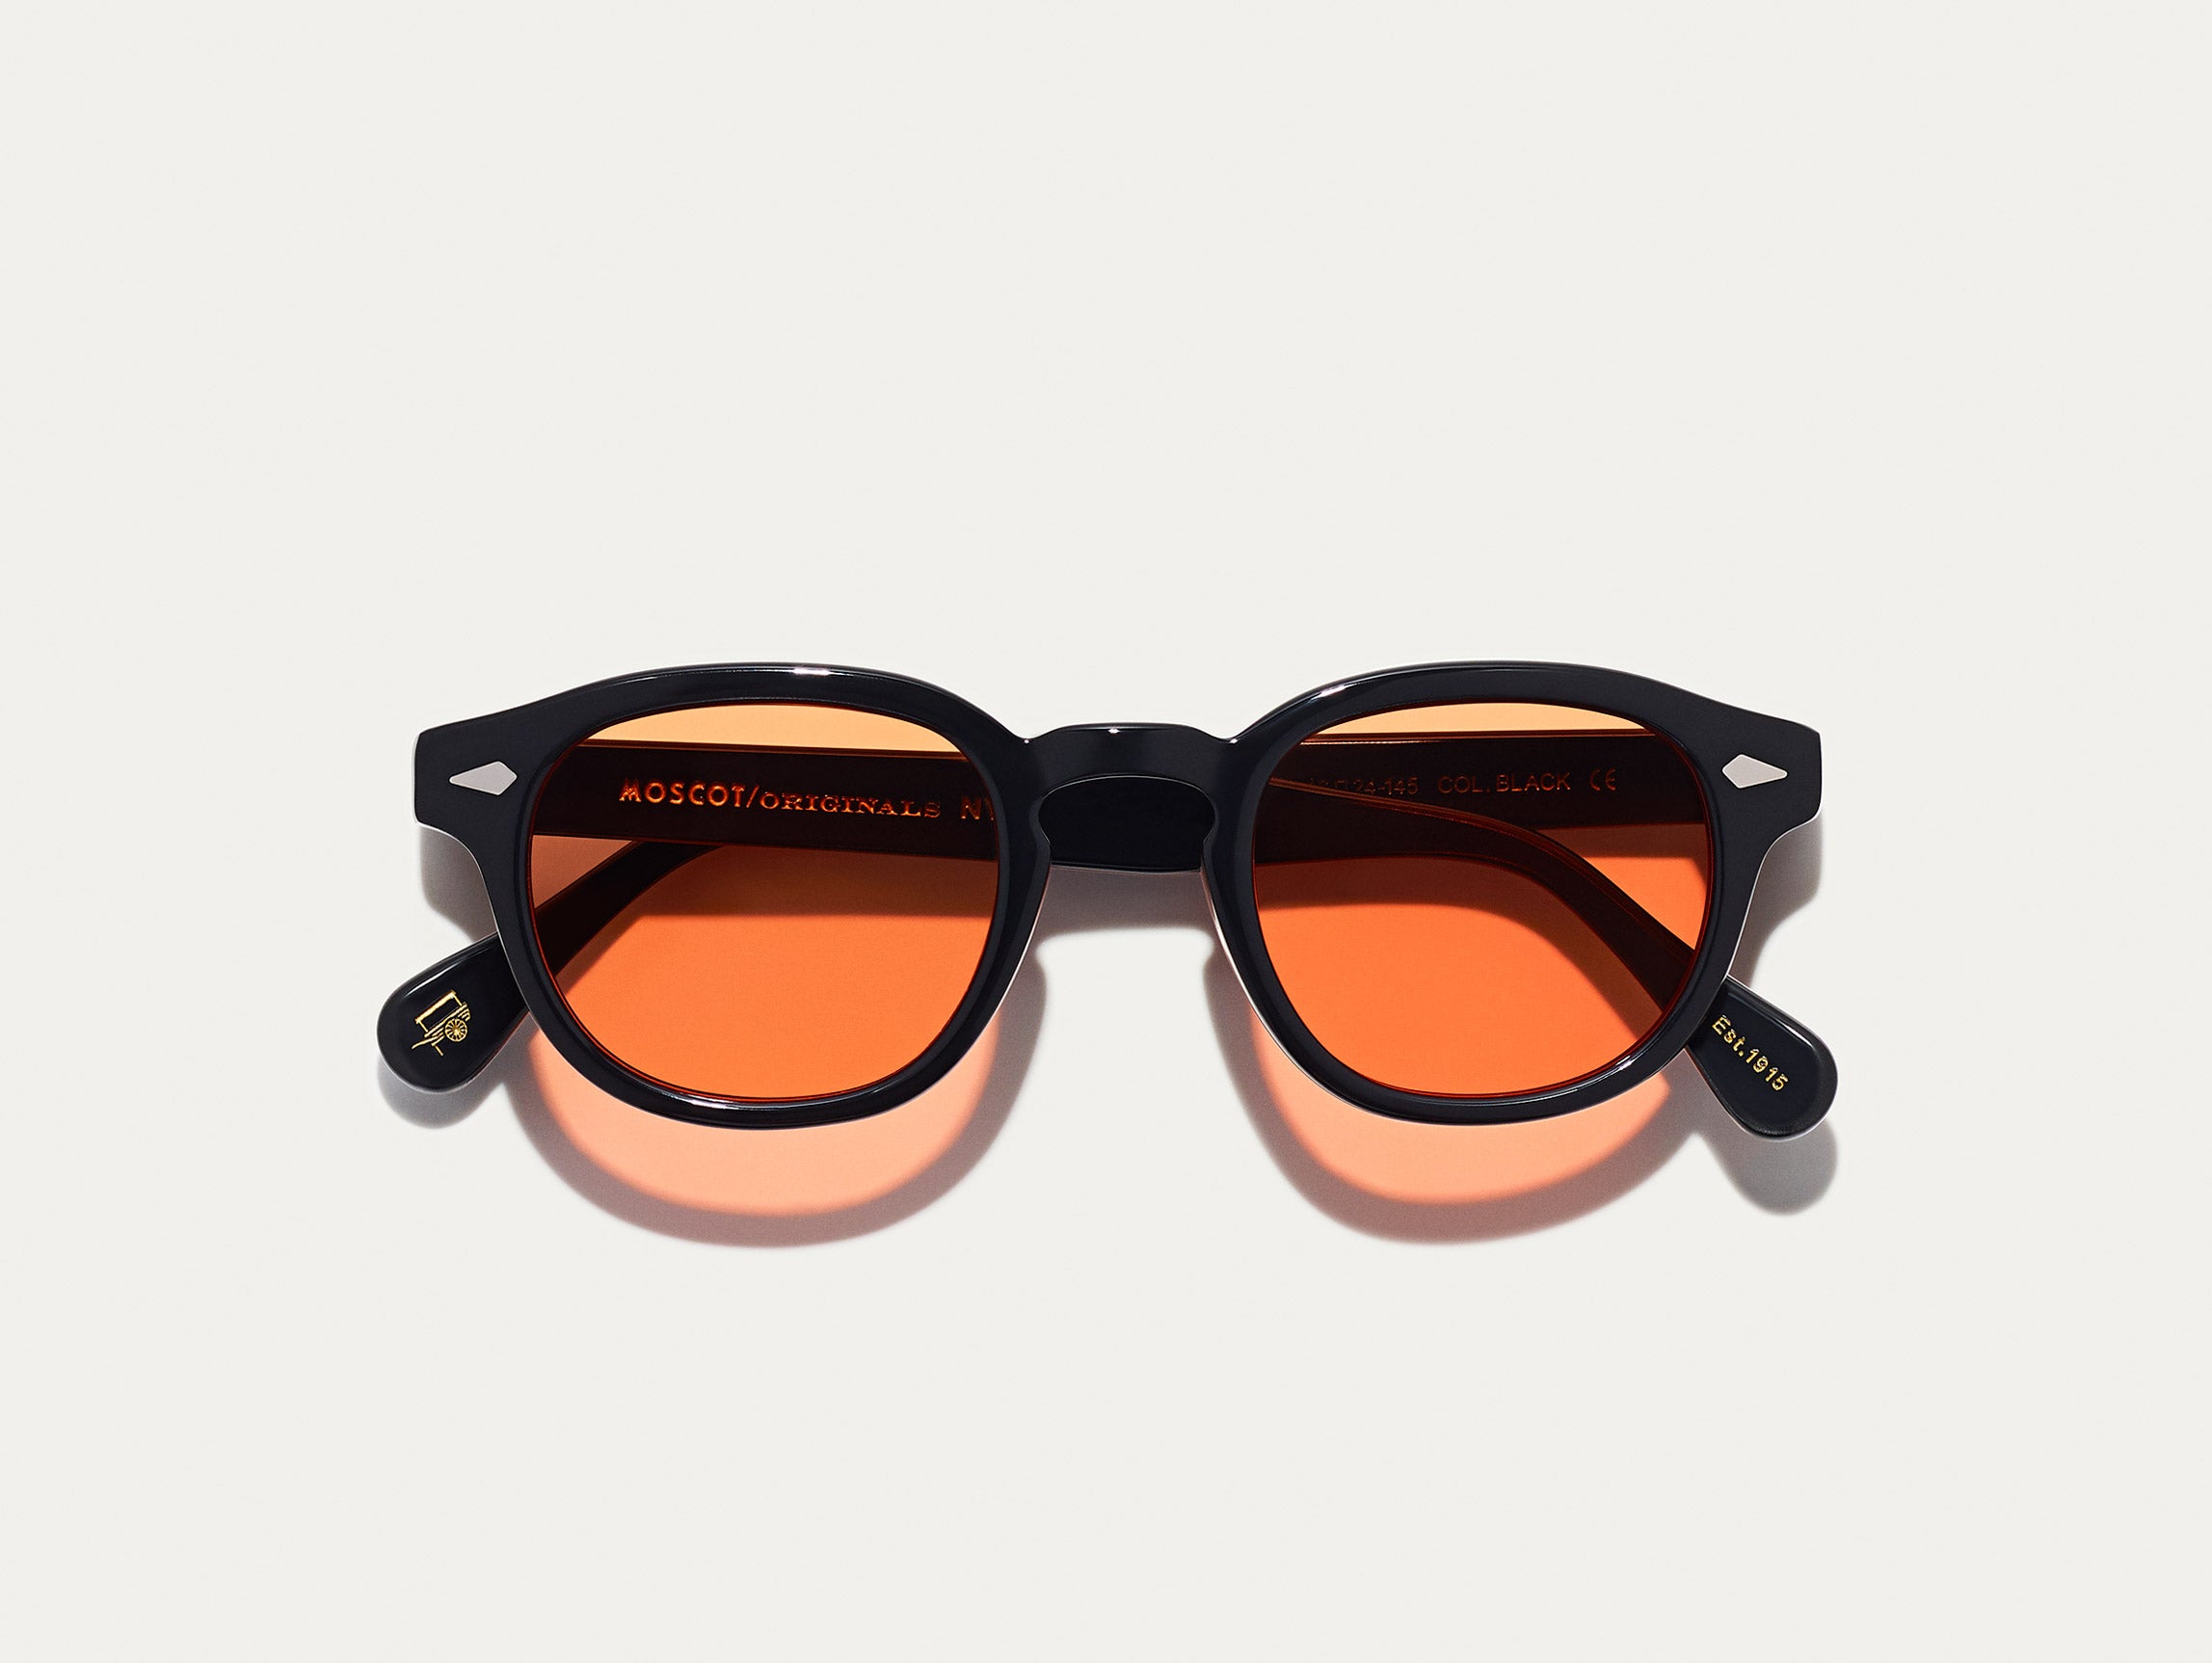 #color_woodstock orange | The LEMTOSH Black with Woodstock Orange Tinted Lenses